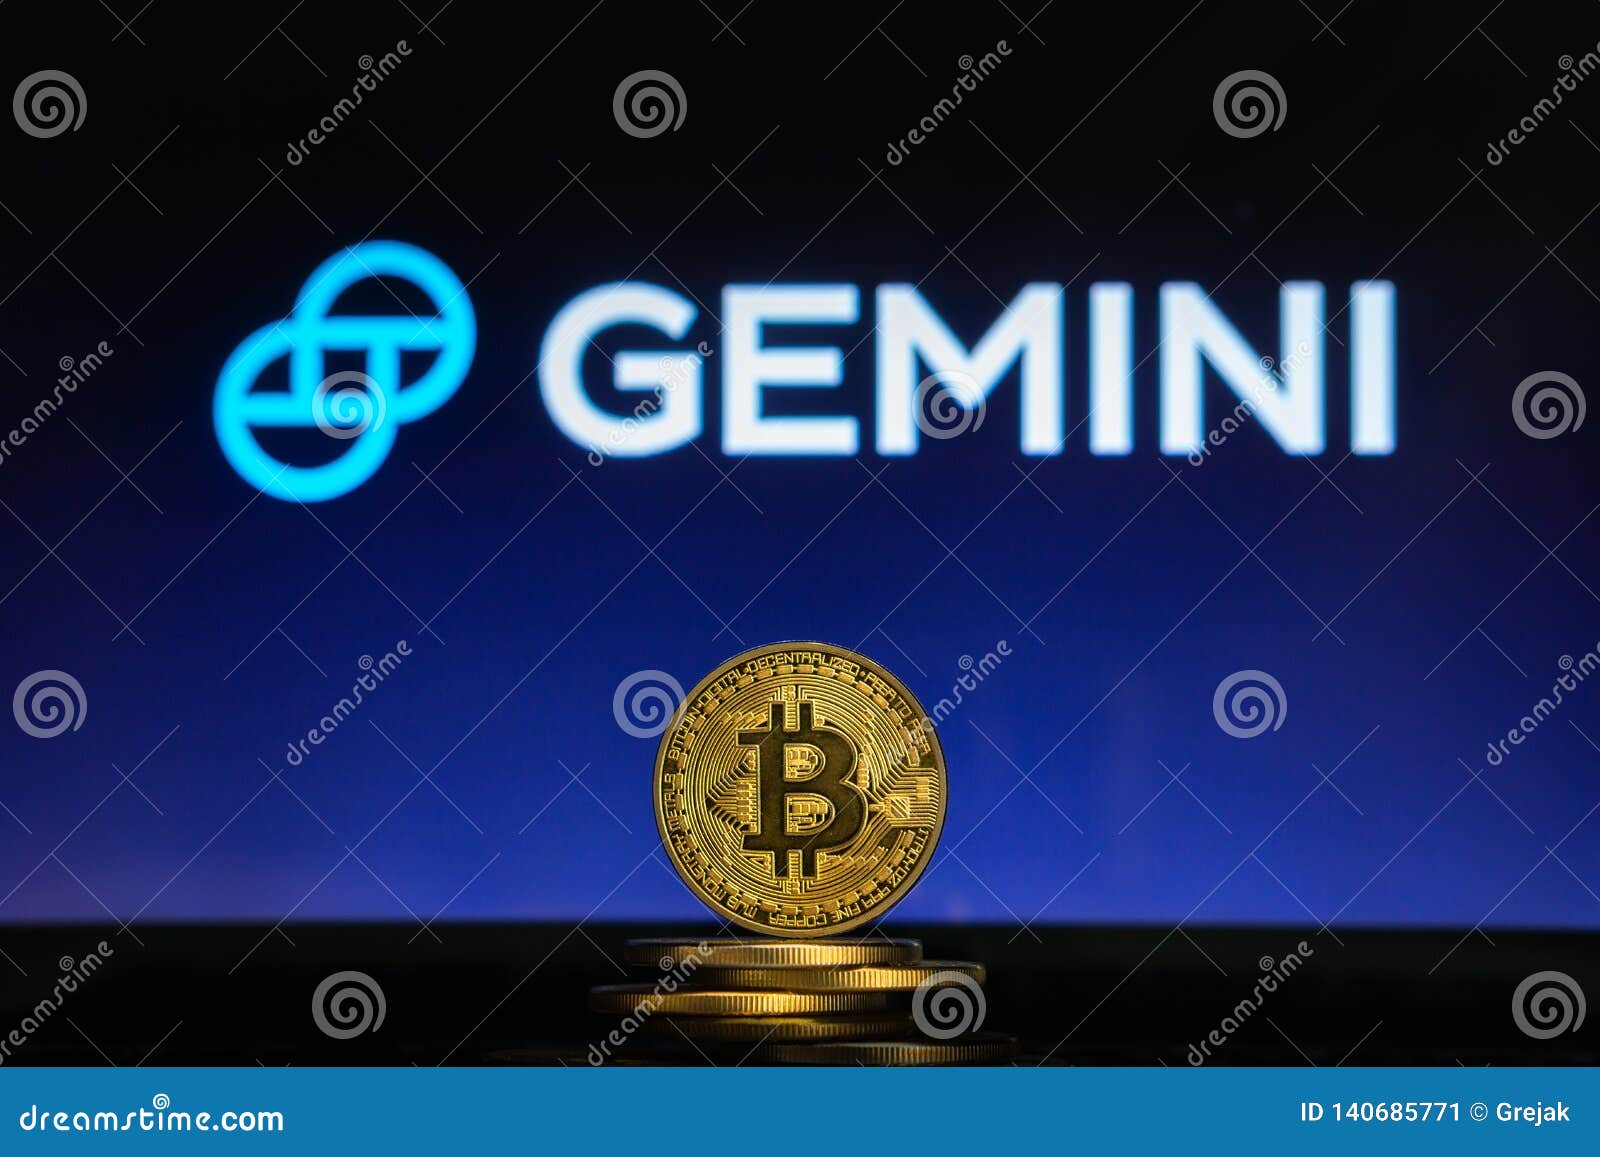 gemini crypto coin